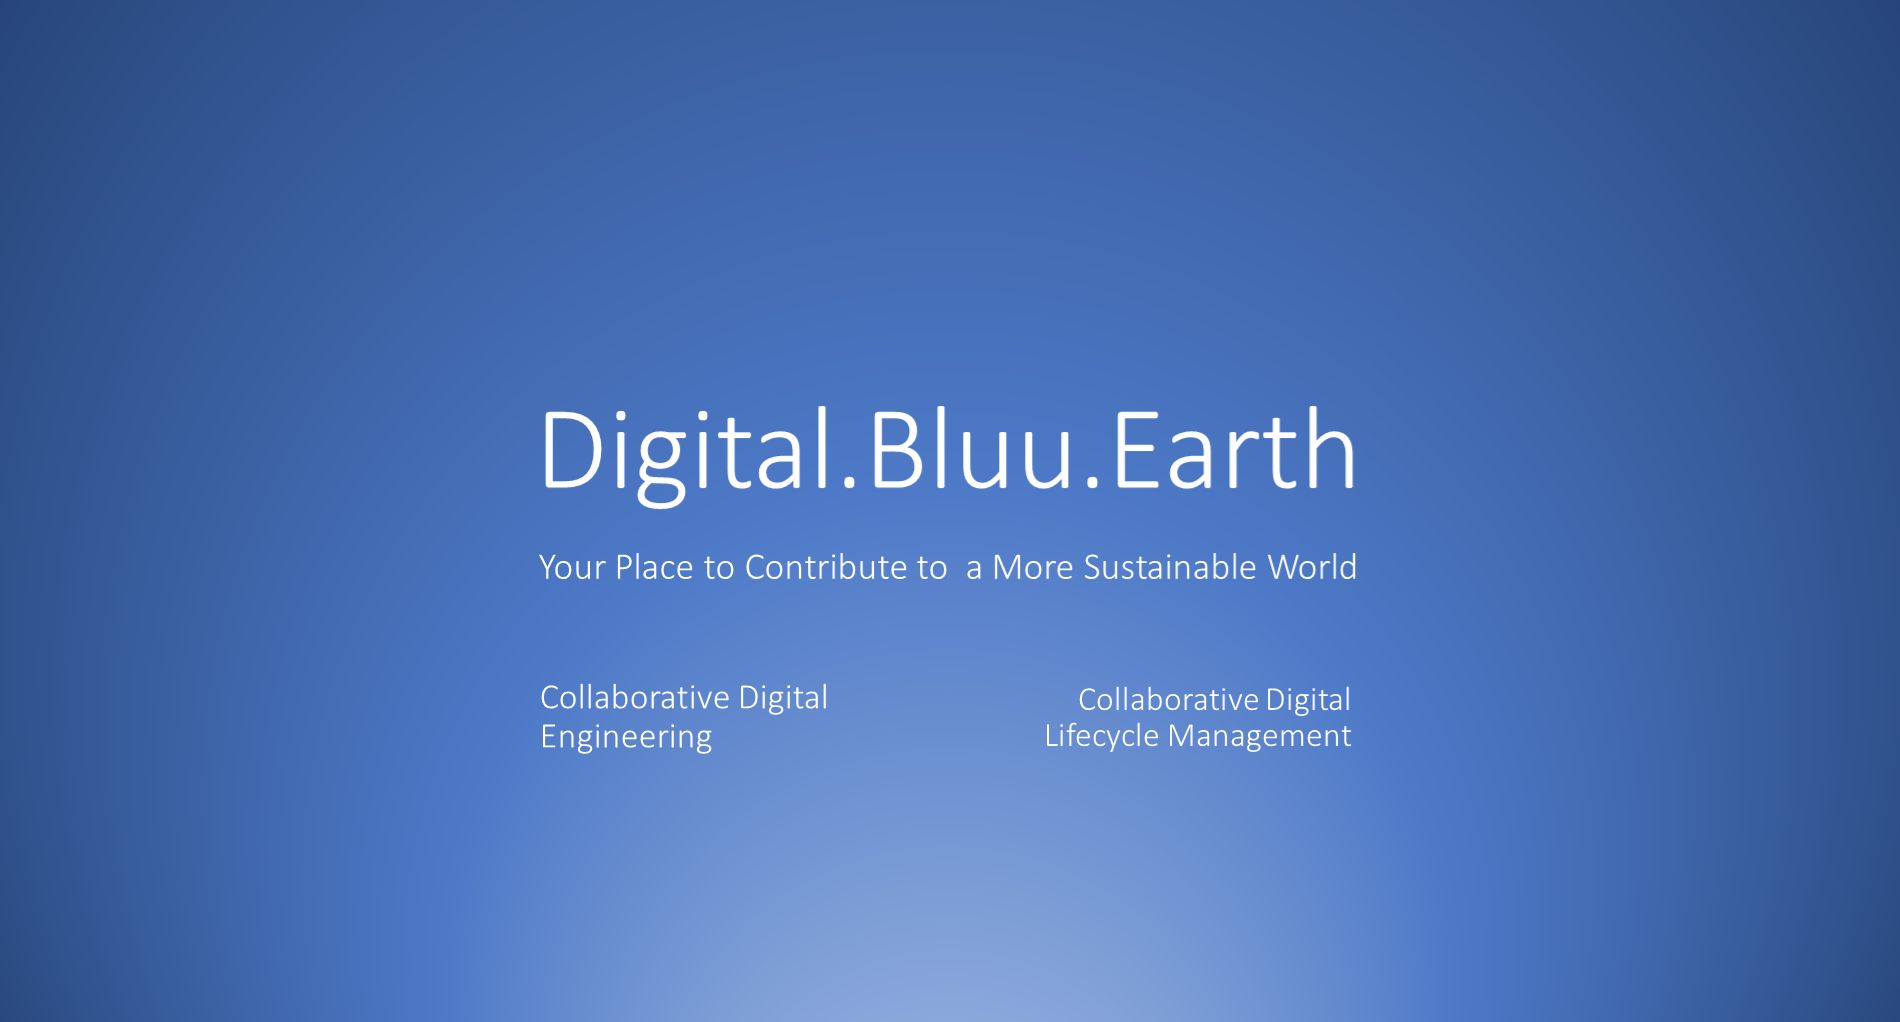 bluu-earth